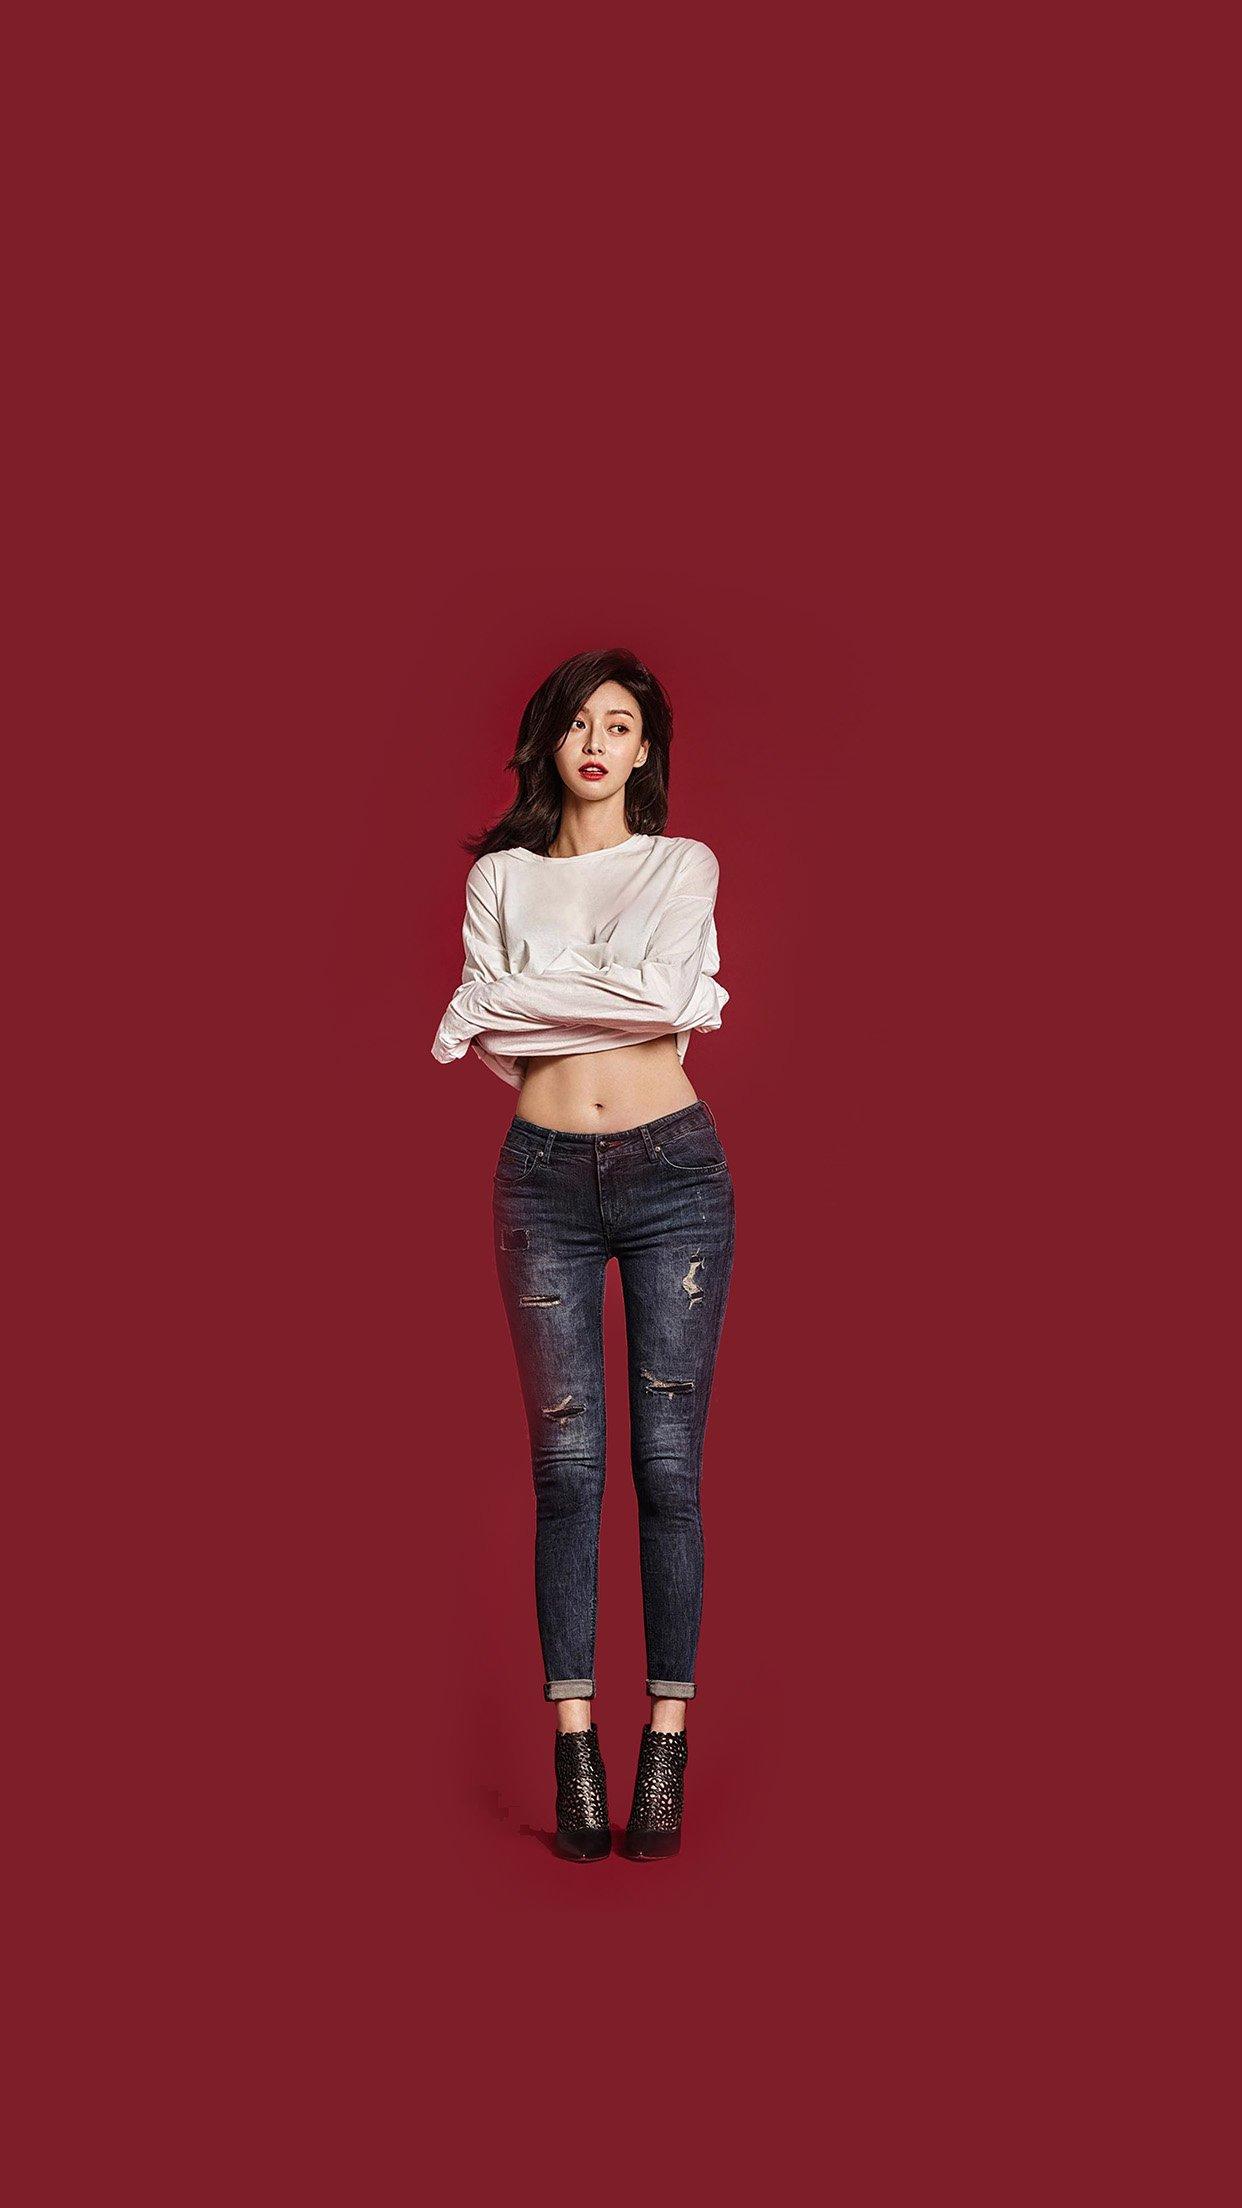 Kpop Girl Kwon Nara Red White Android wallpaper HD